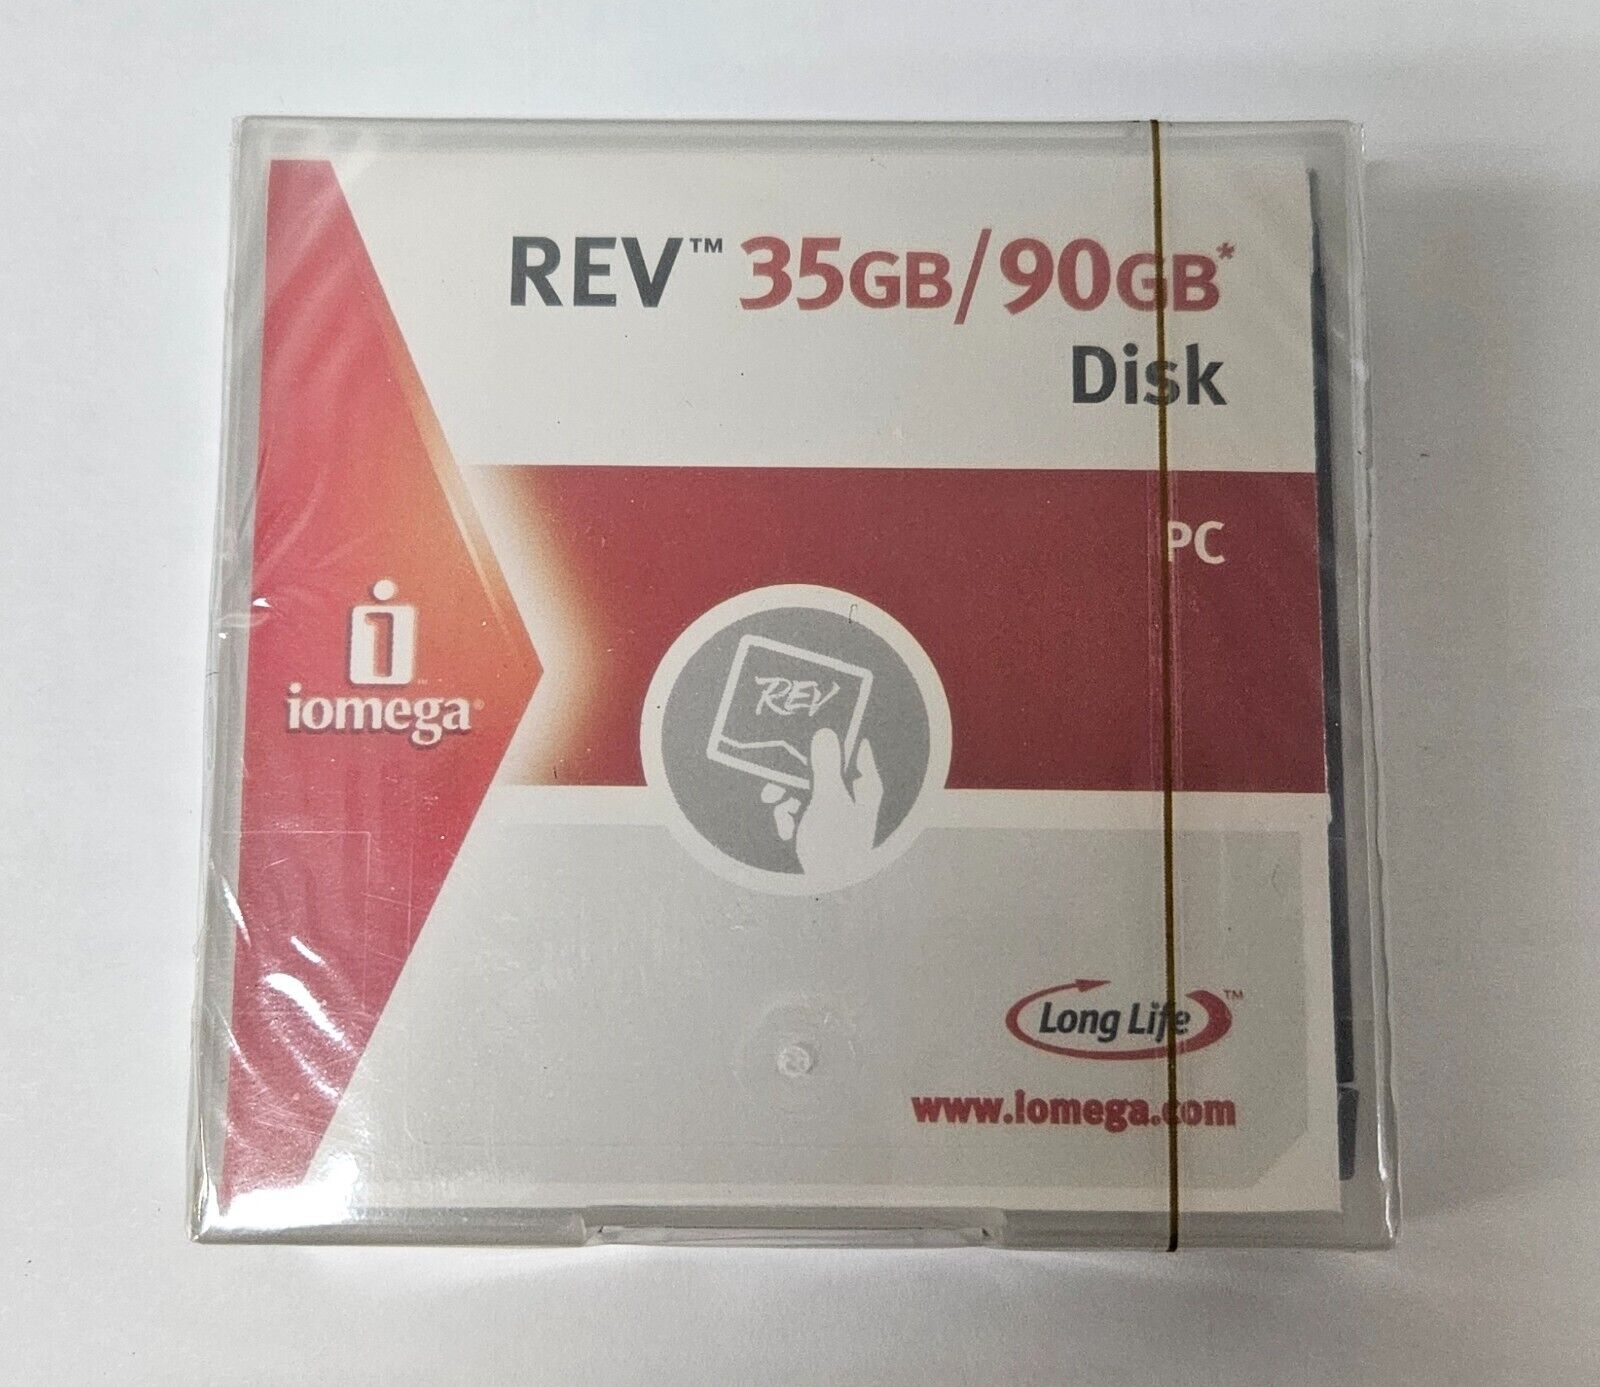 Iomega REV Disk 35GB Capacity PC Factory Sealed